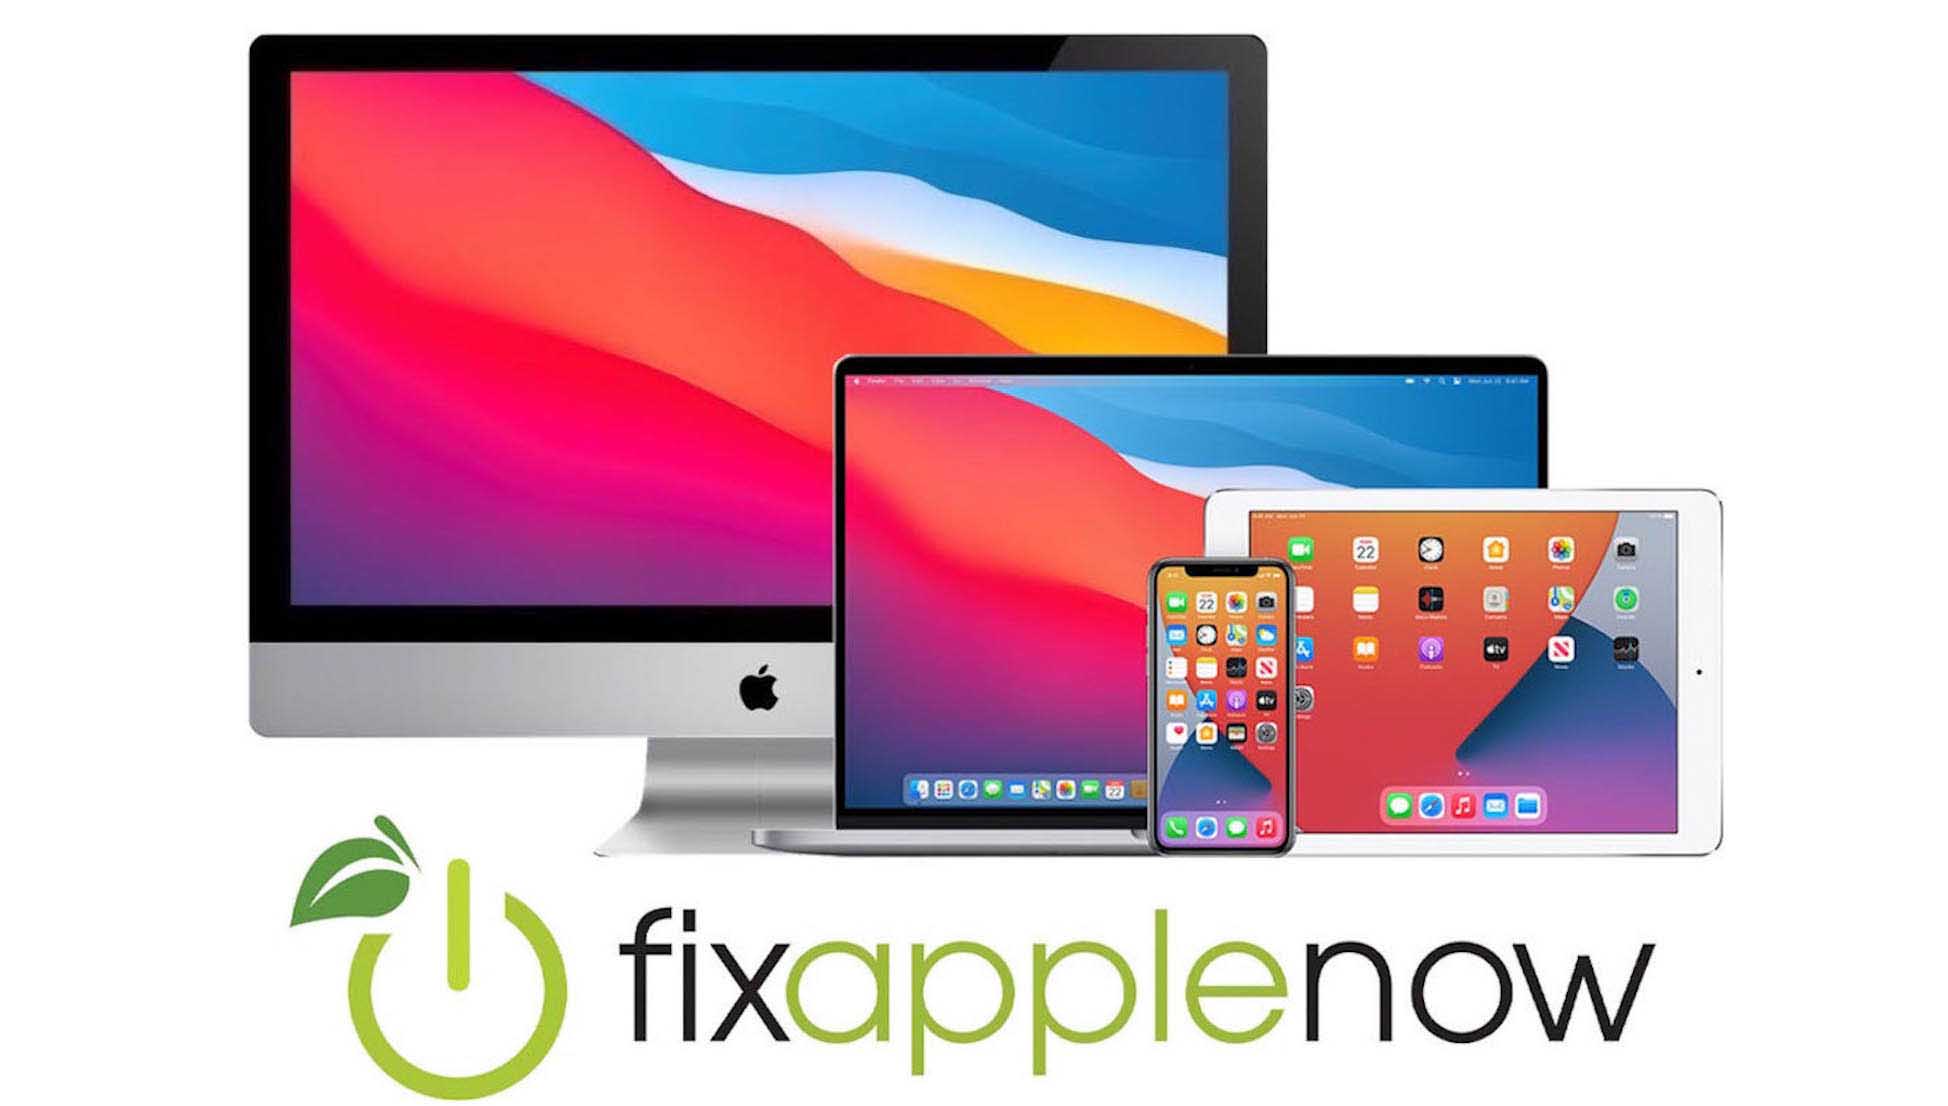 Fix Apple Now - iPhone, iPad, MacBook, iMac & Mac Repairs